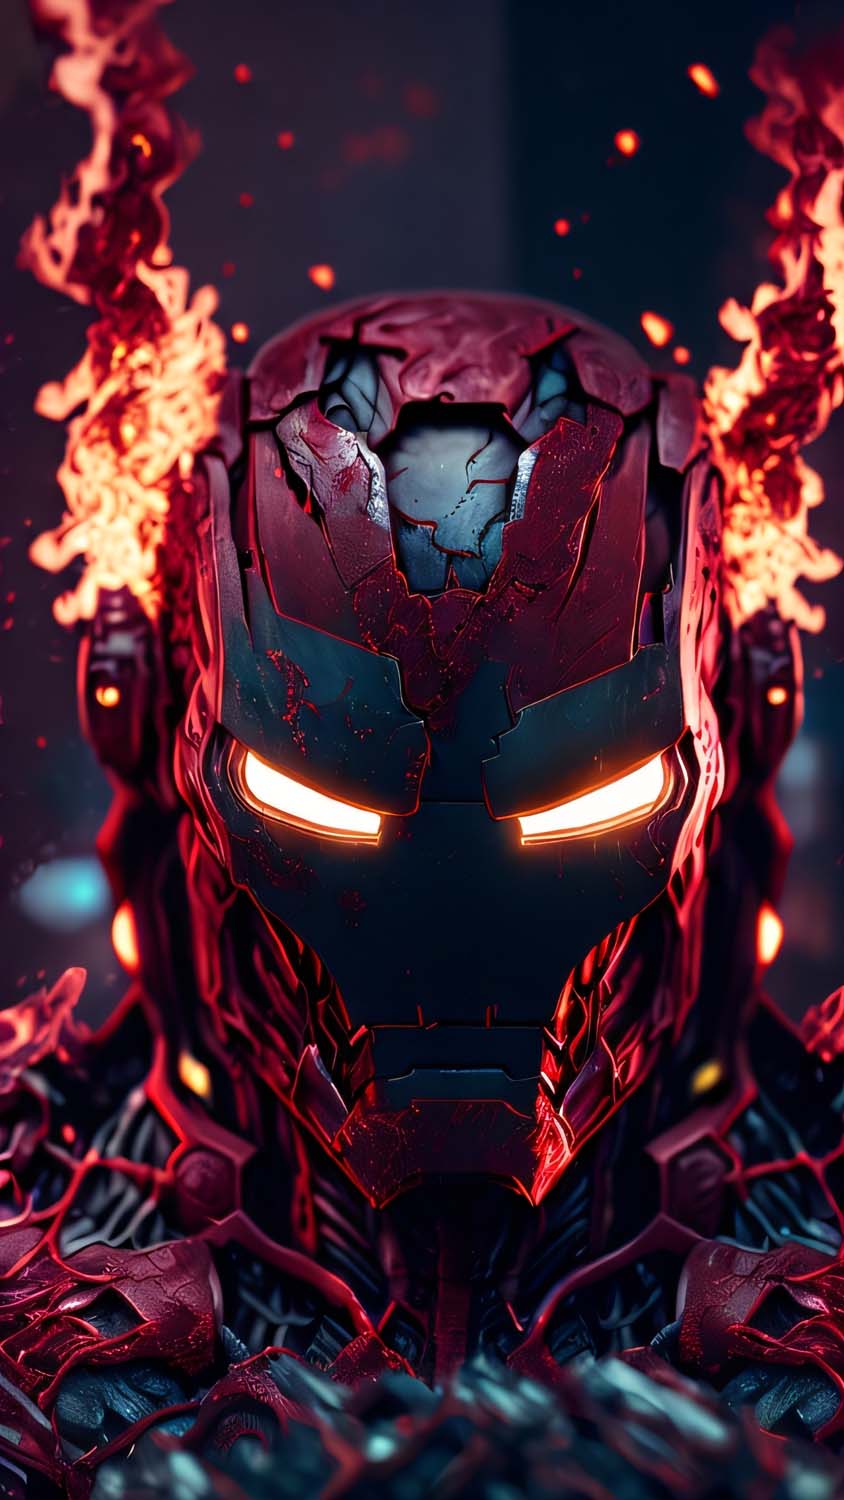 Iron Man Broken Armor IPhone Wallpaper HD - IPhone Wallpapers ...